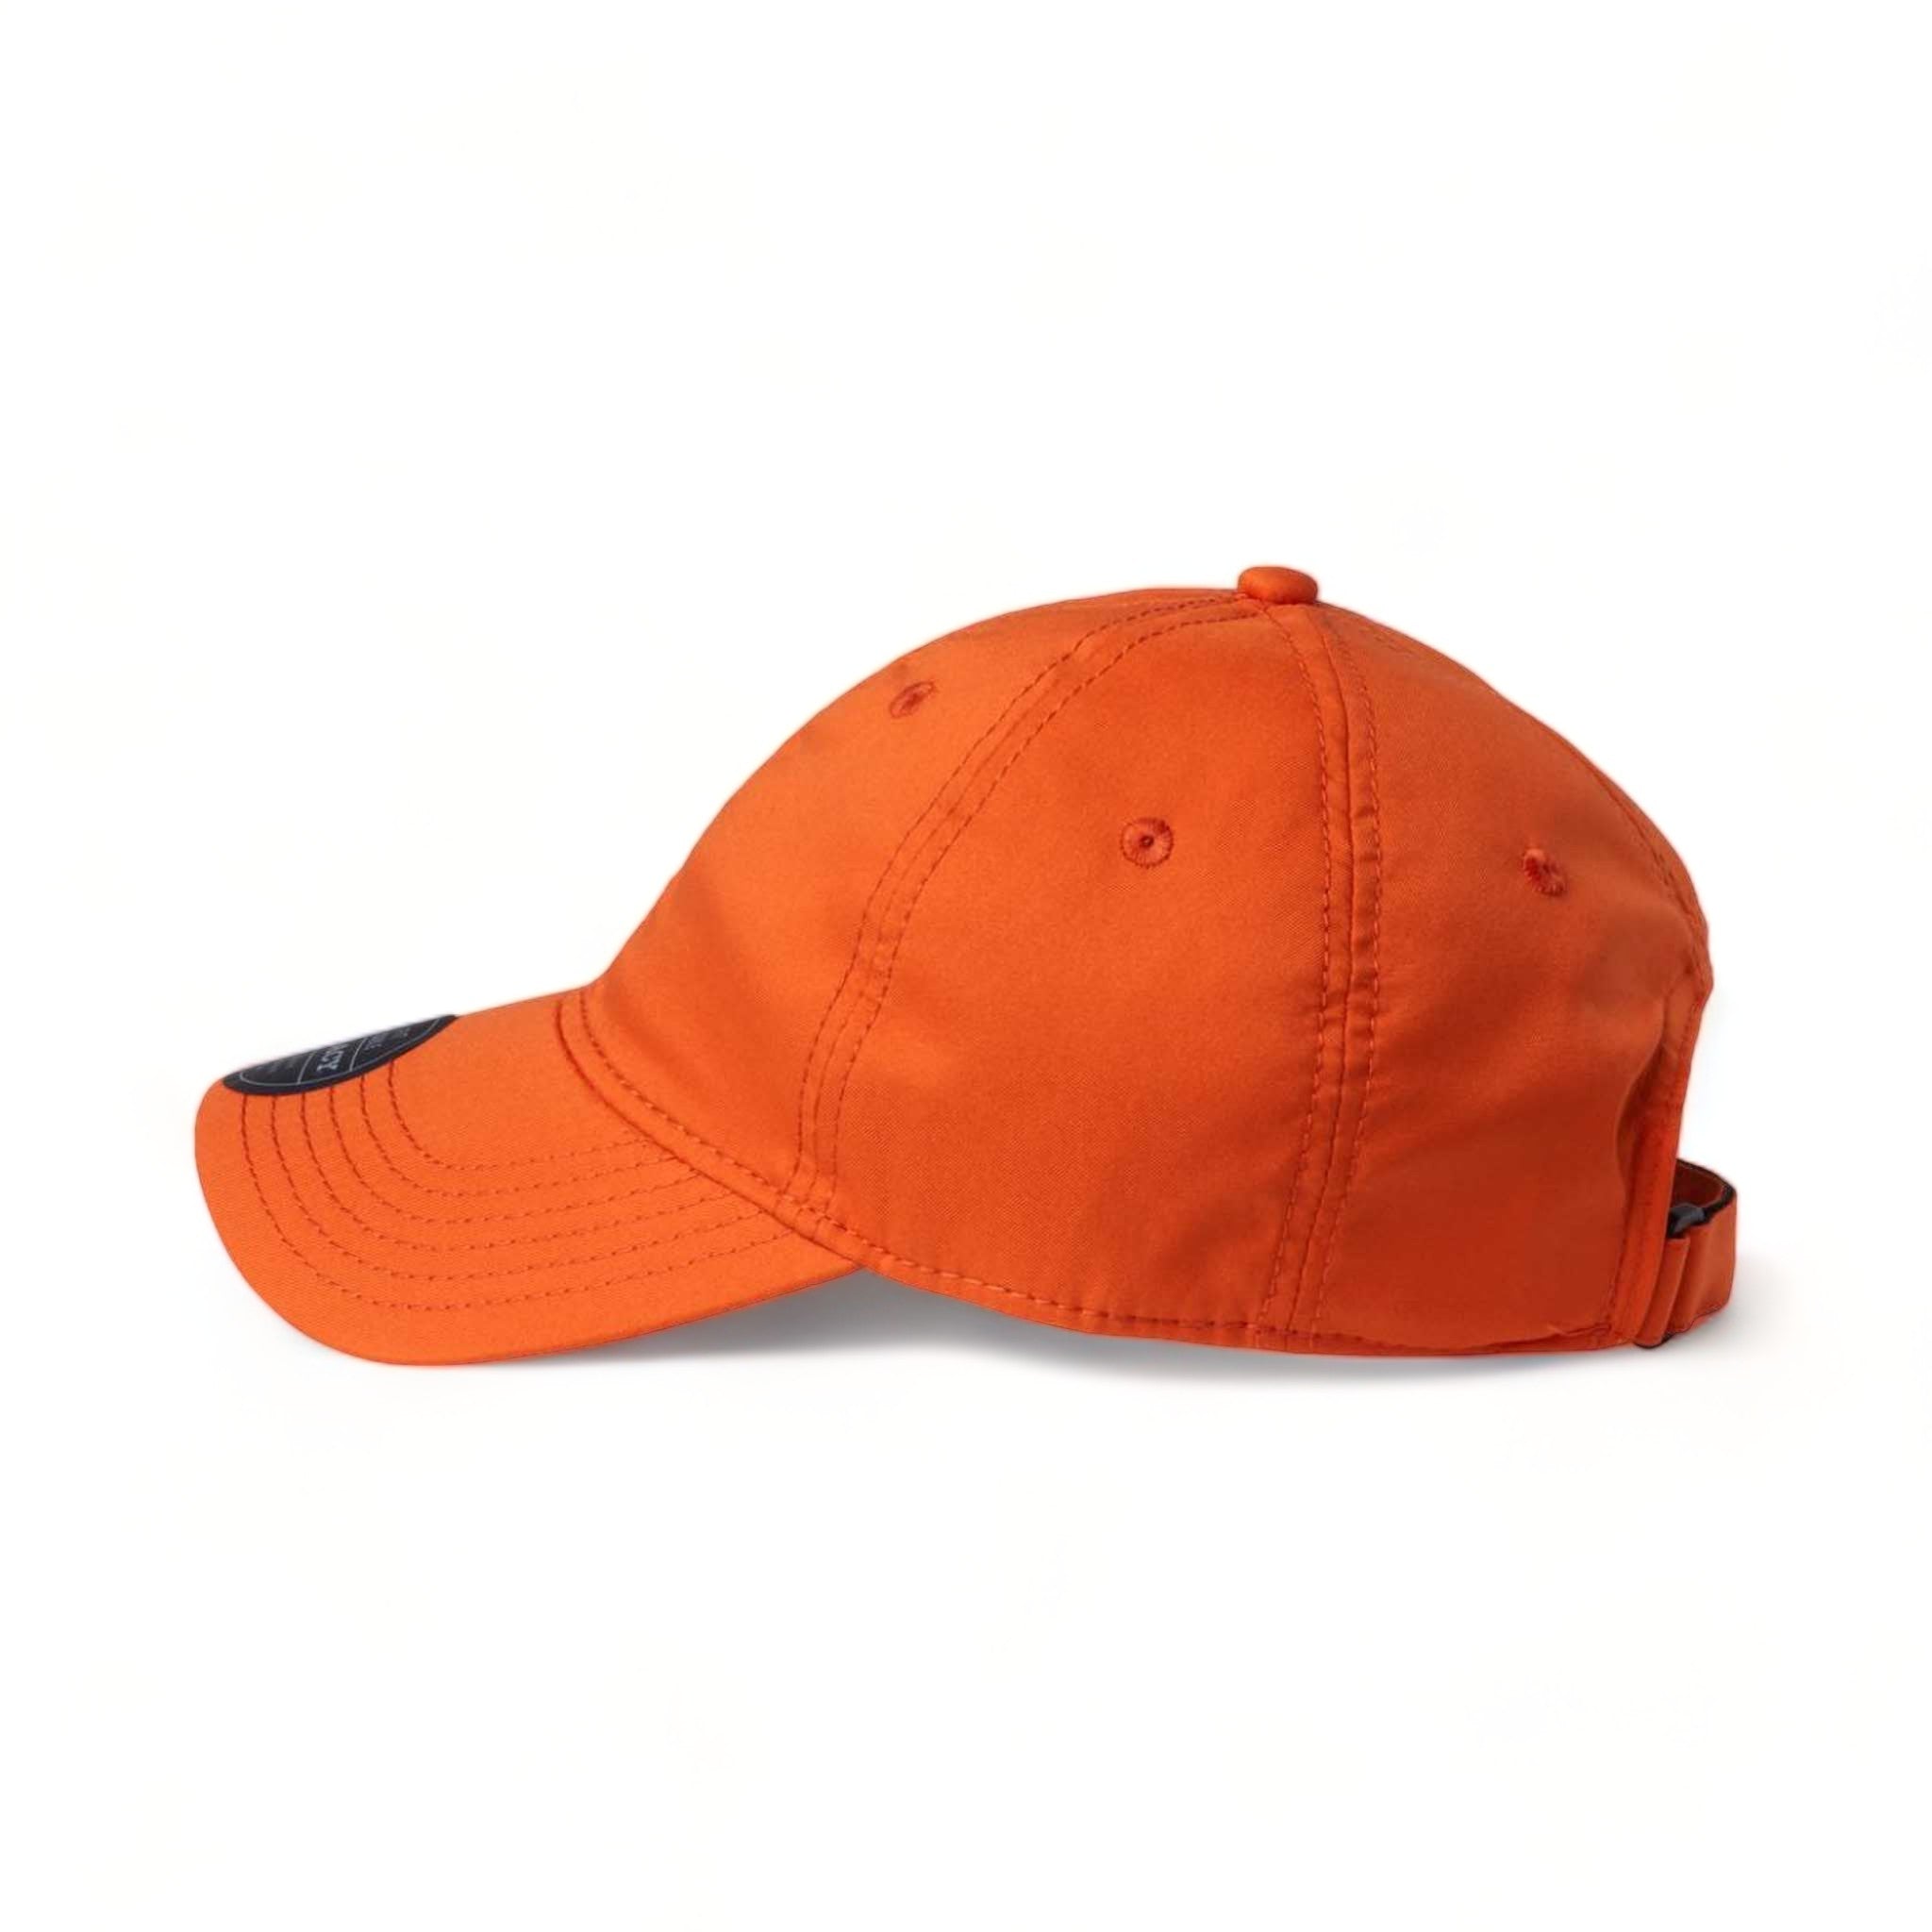 Side view of LEGACY CFA custom hat in orange